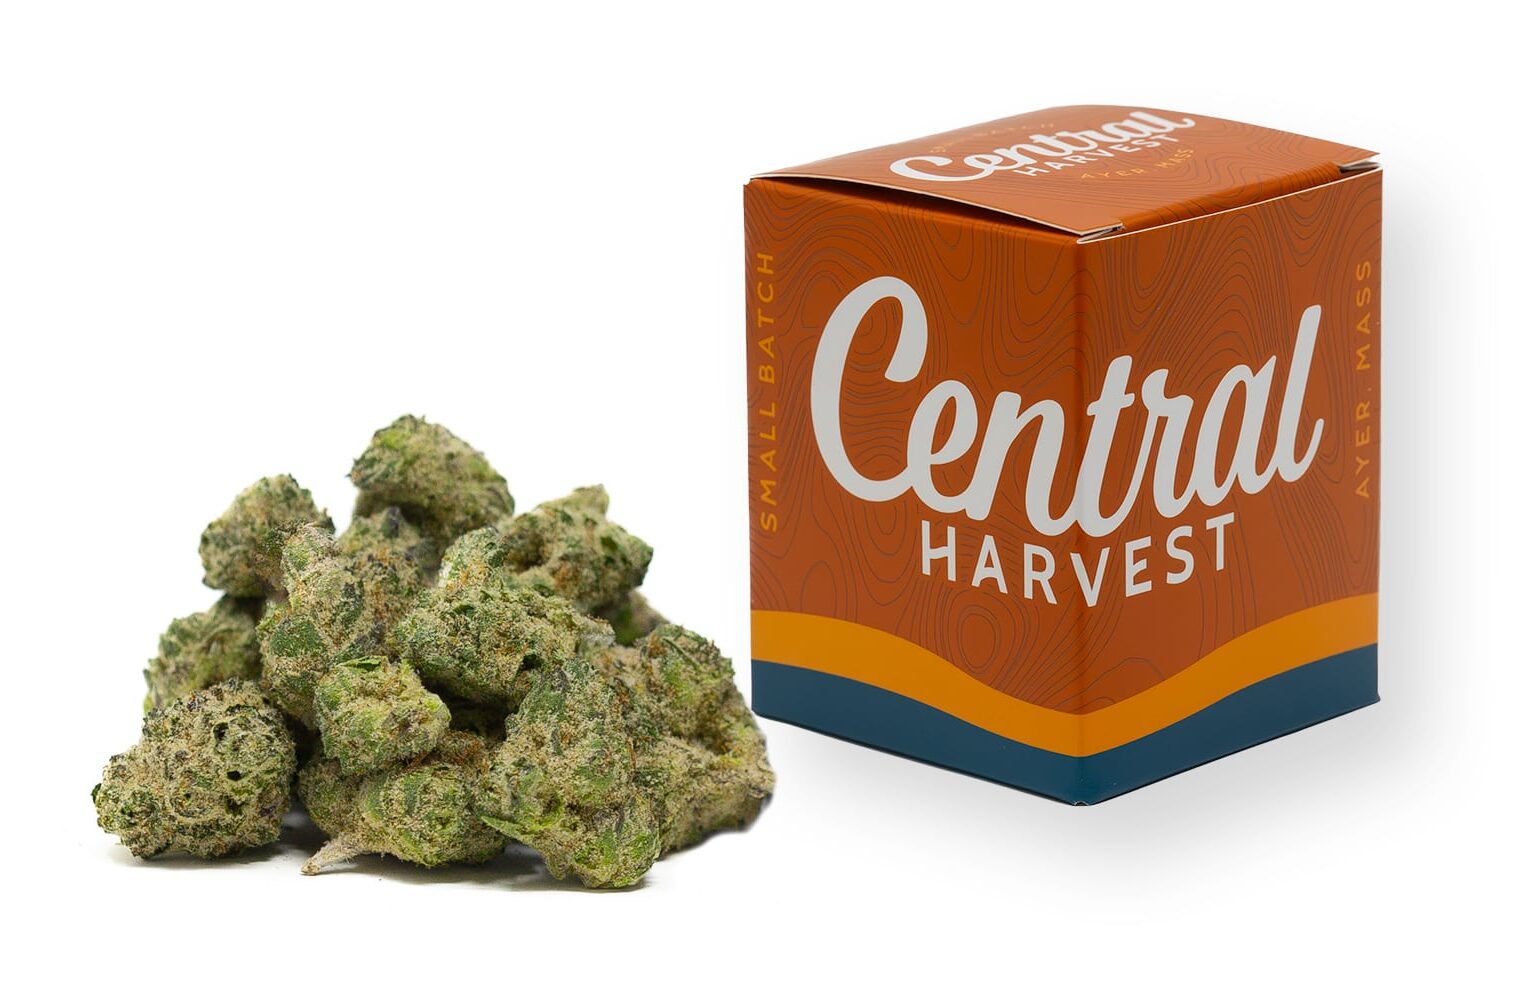 Buckin' Runtz an Indica Cannabis strain grown by Central Harvest